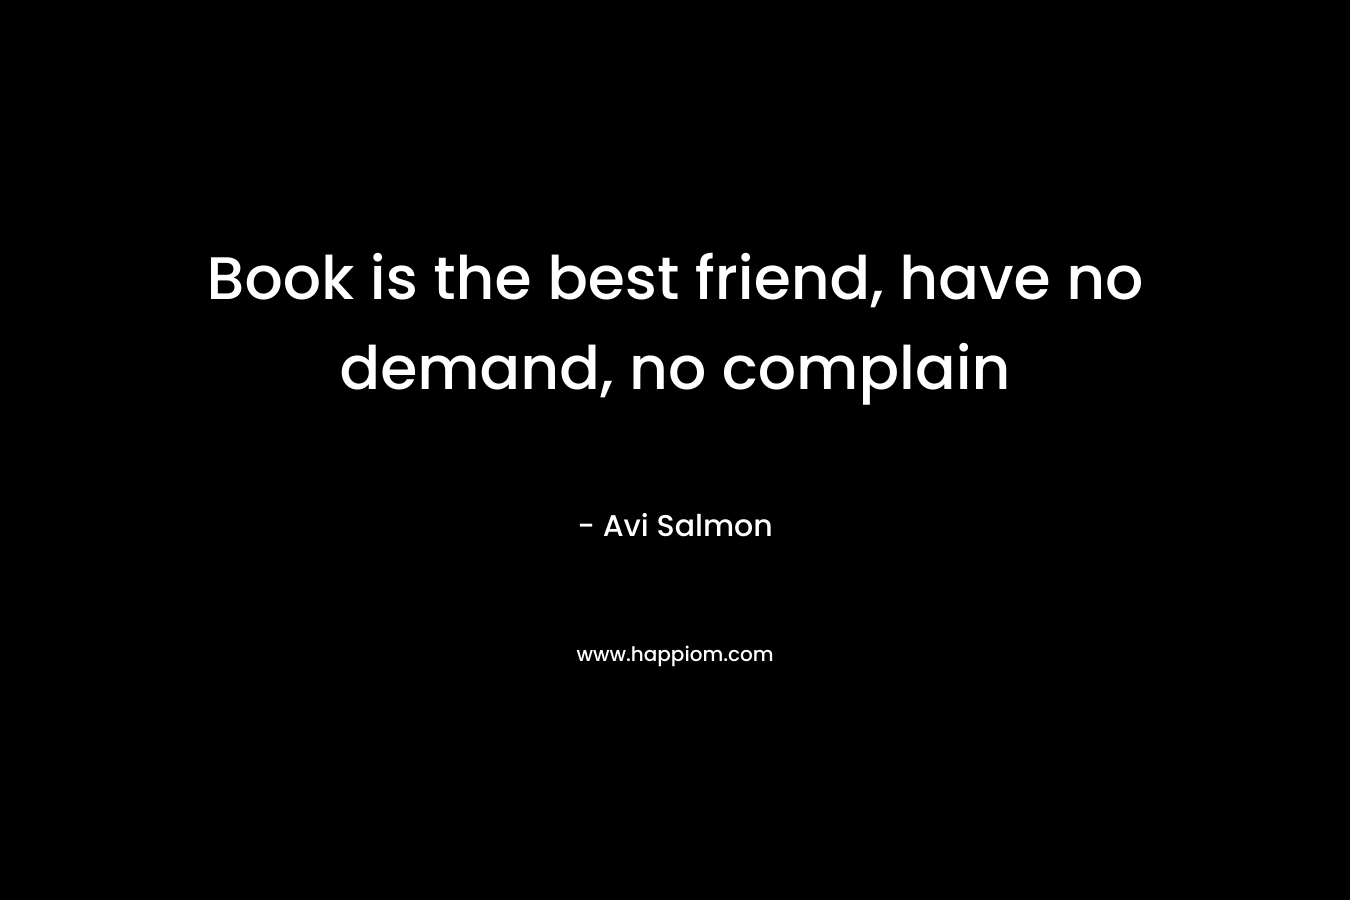 Book is the best friend, have no demand, no complain